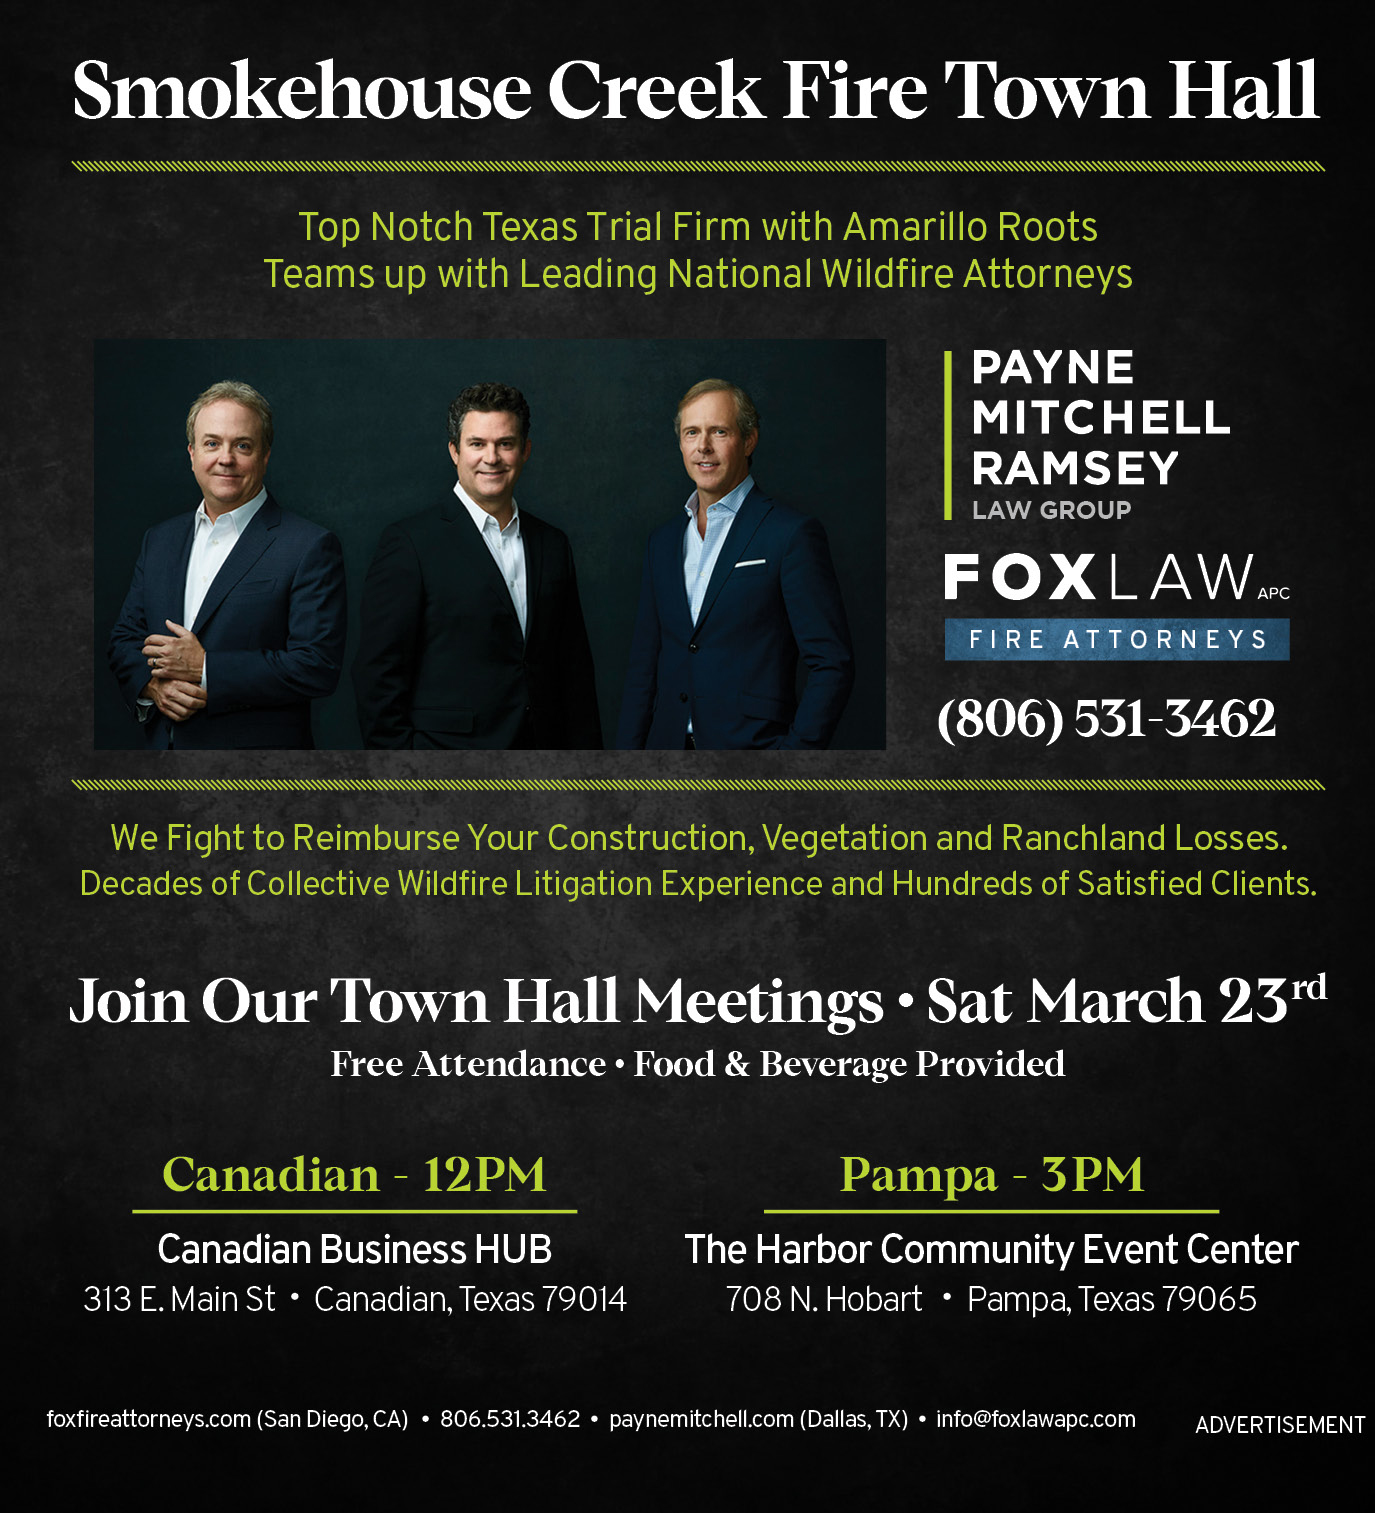 Smokehouse Creek Fire Town Hall-Fox Law